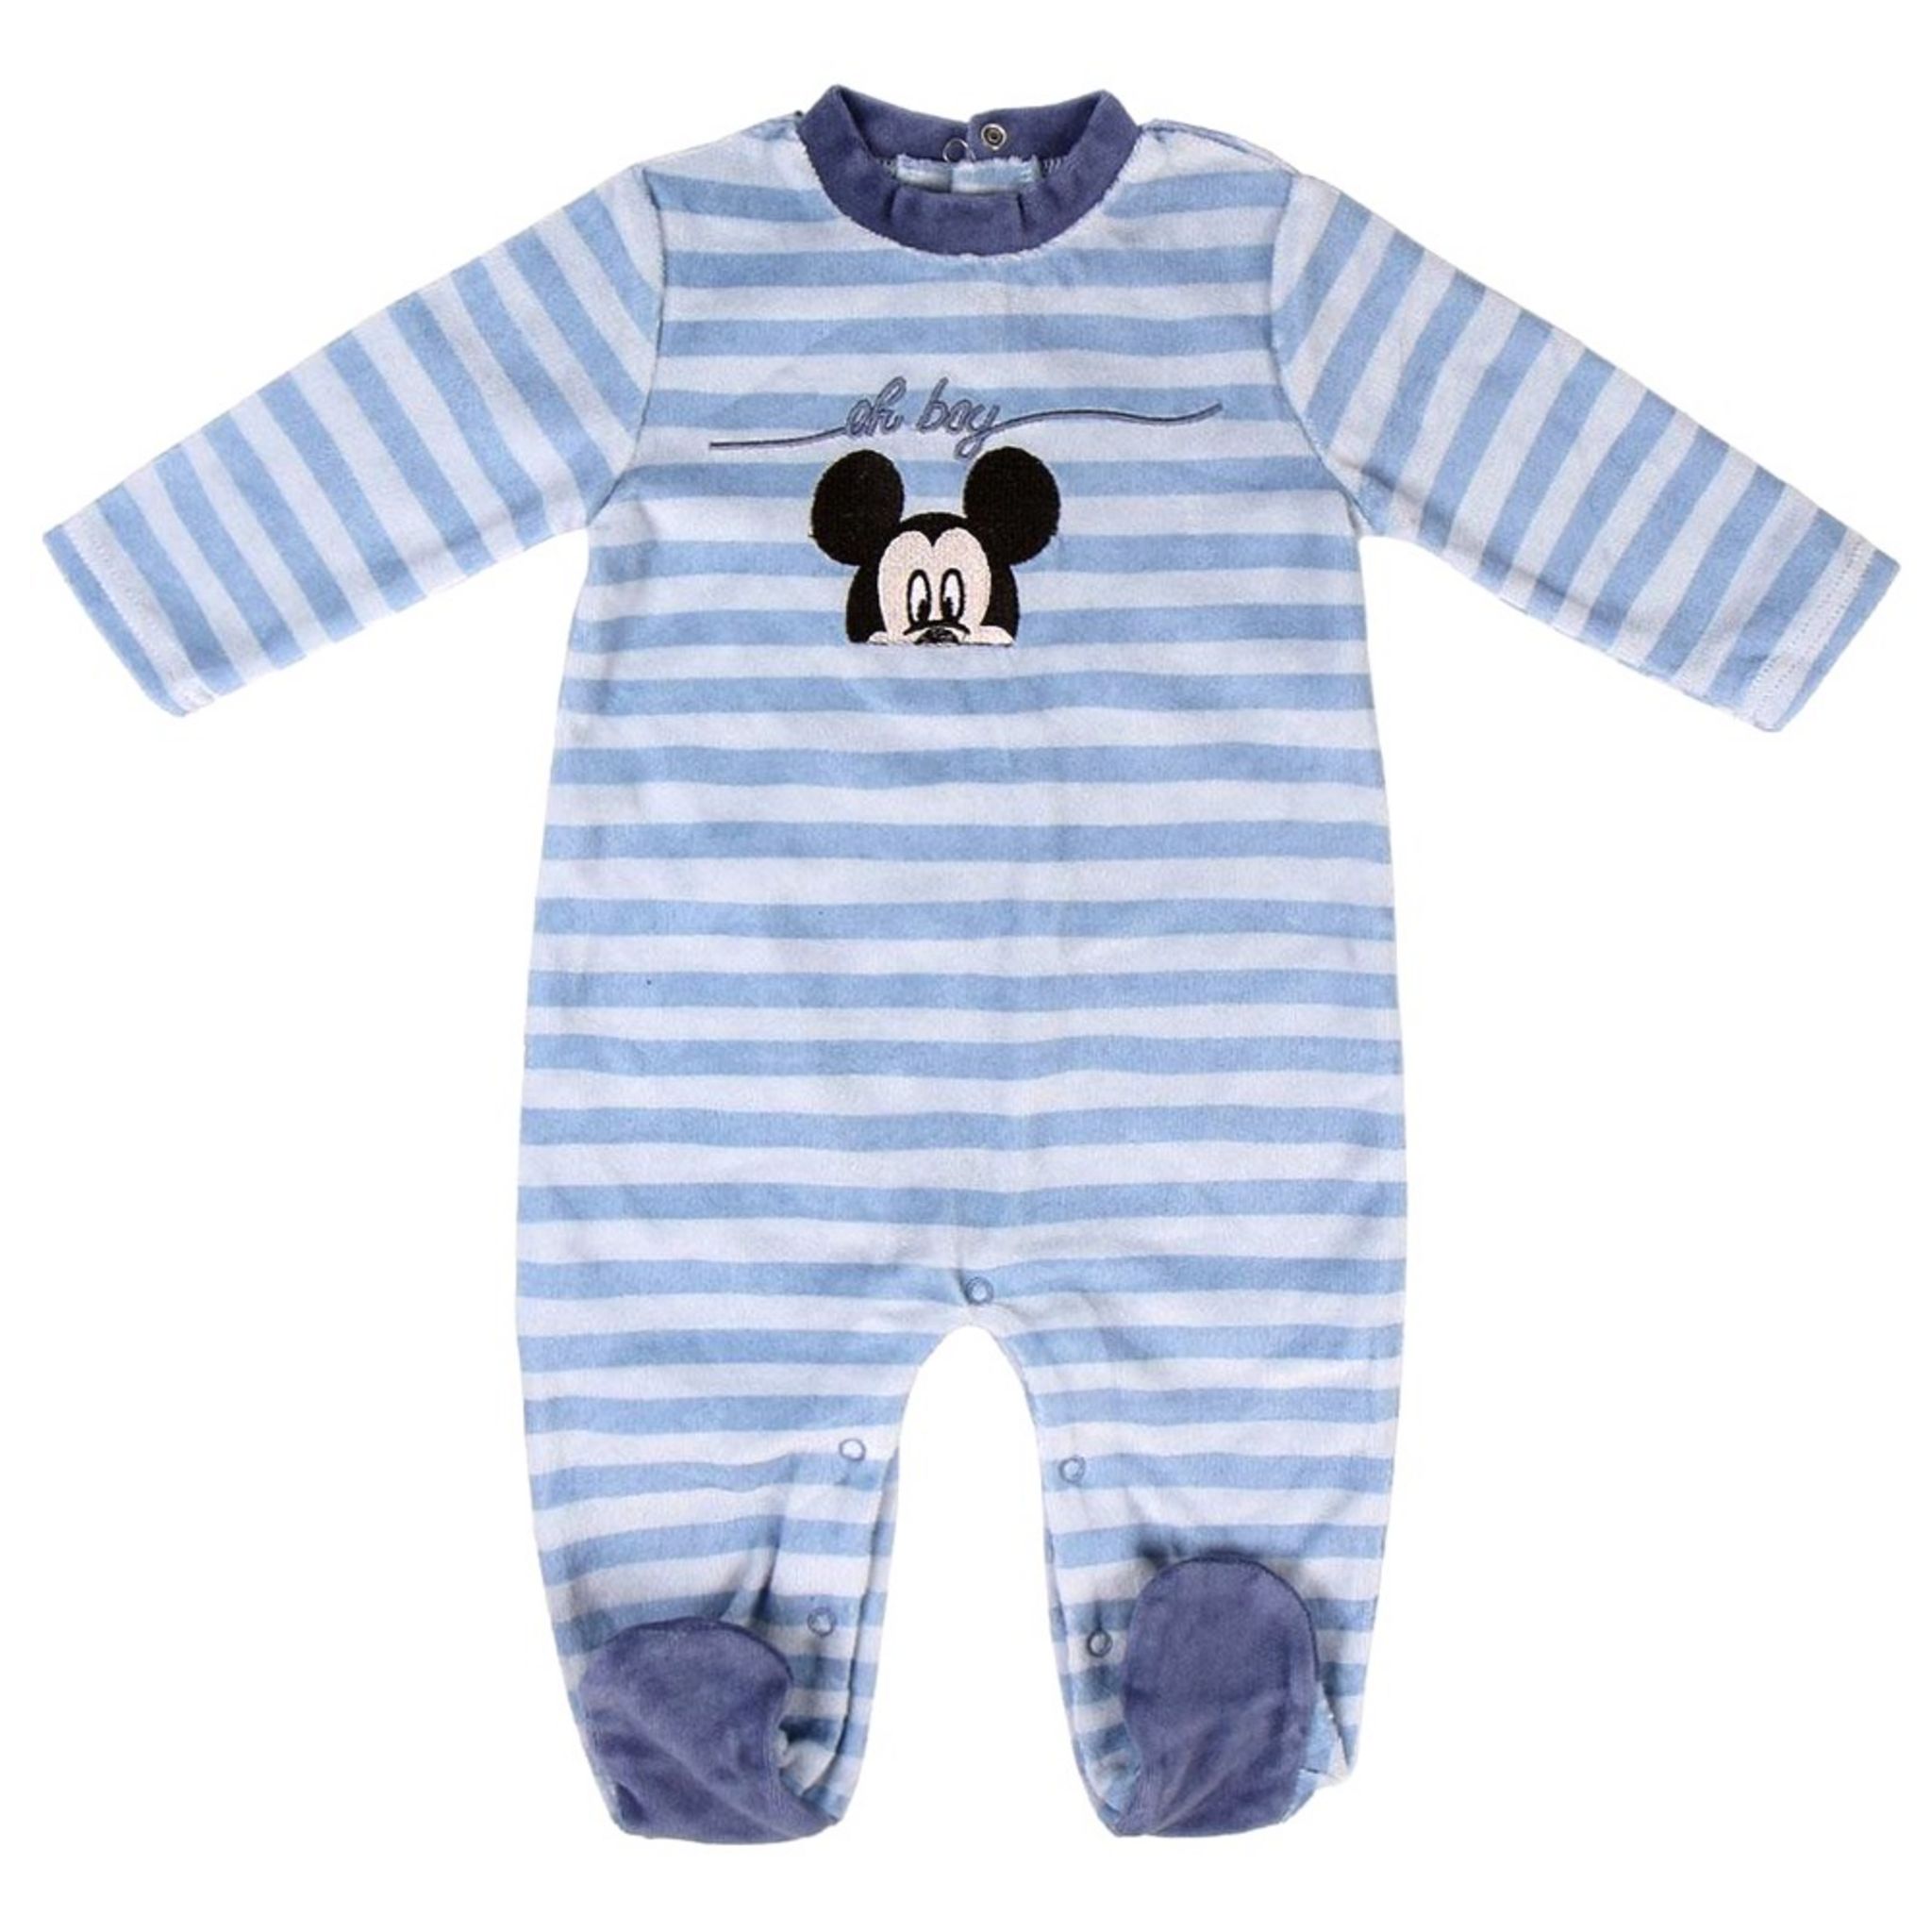 Dors bien Mickey taille 1 mois Pyjamas bebe cadeau naissance pas